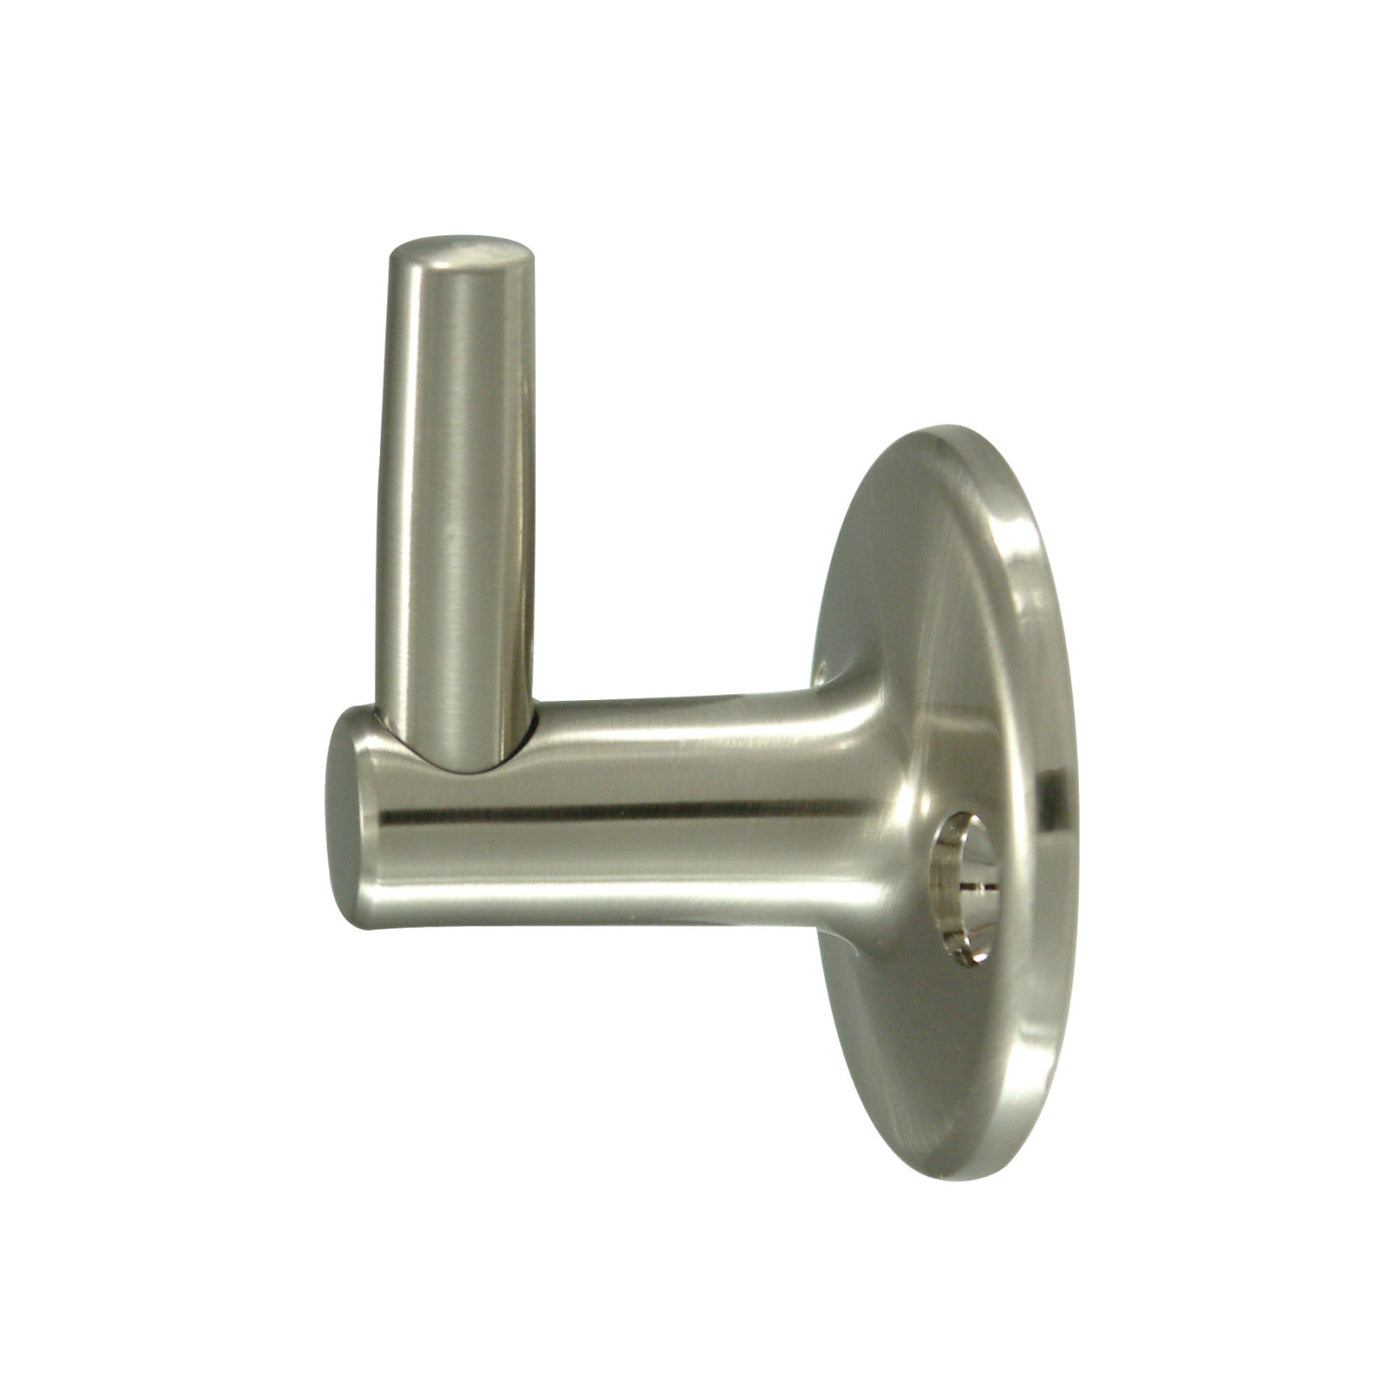 Elements of Design DK171A8 Hand Shower Pin Wall Mount Bracket, Brushed Nickel